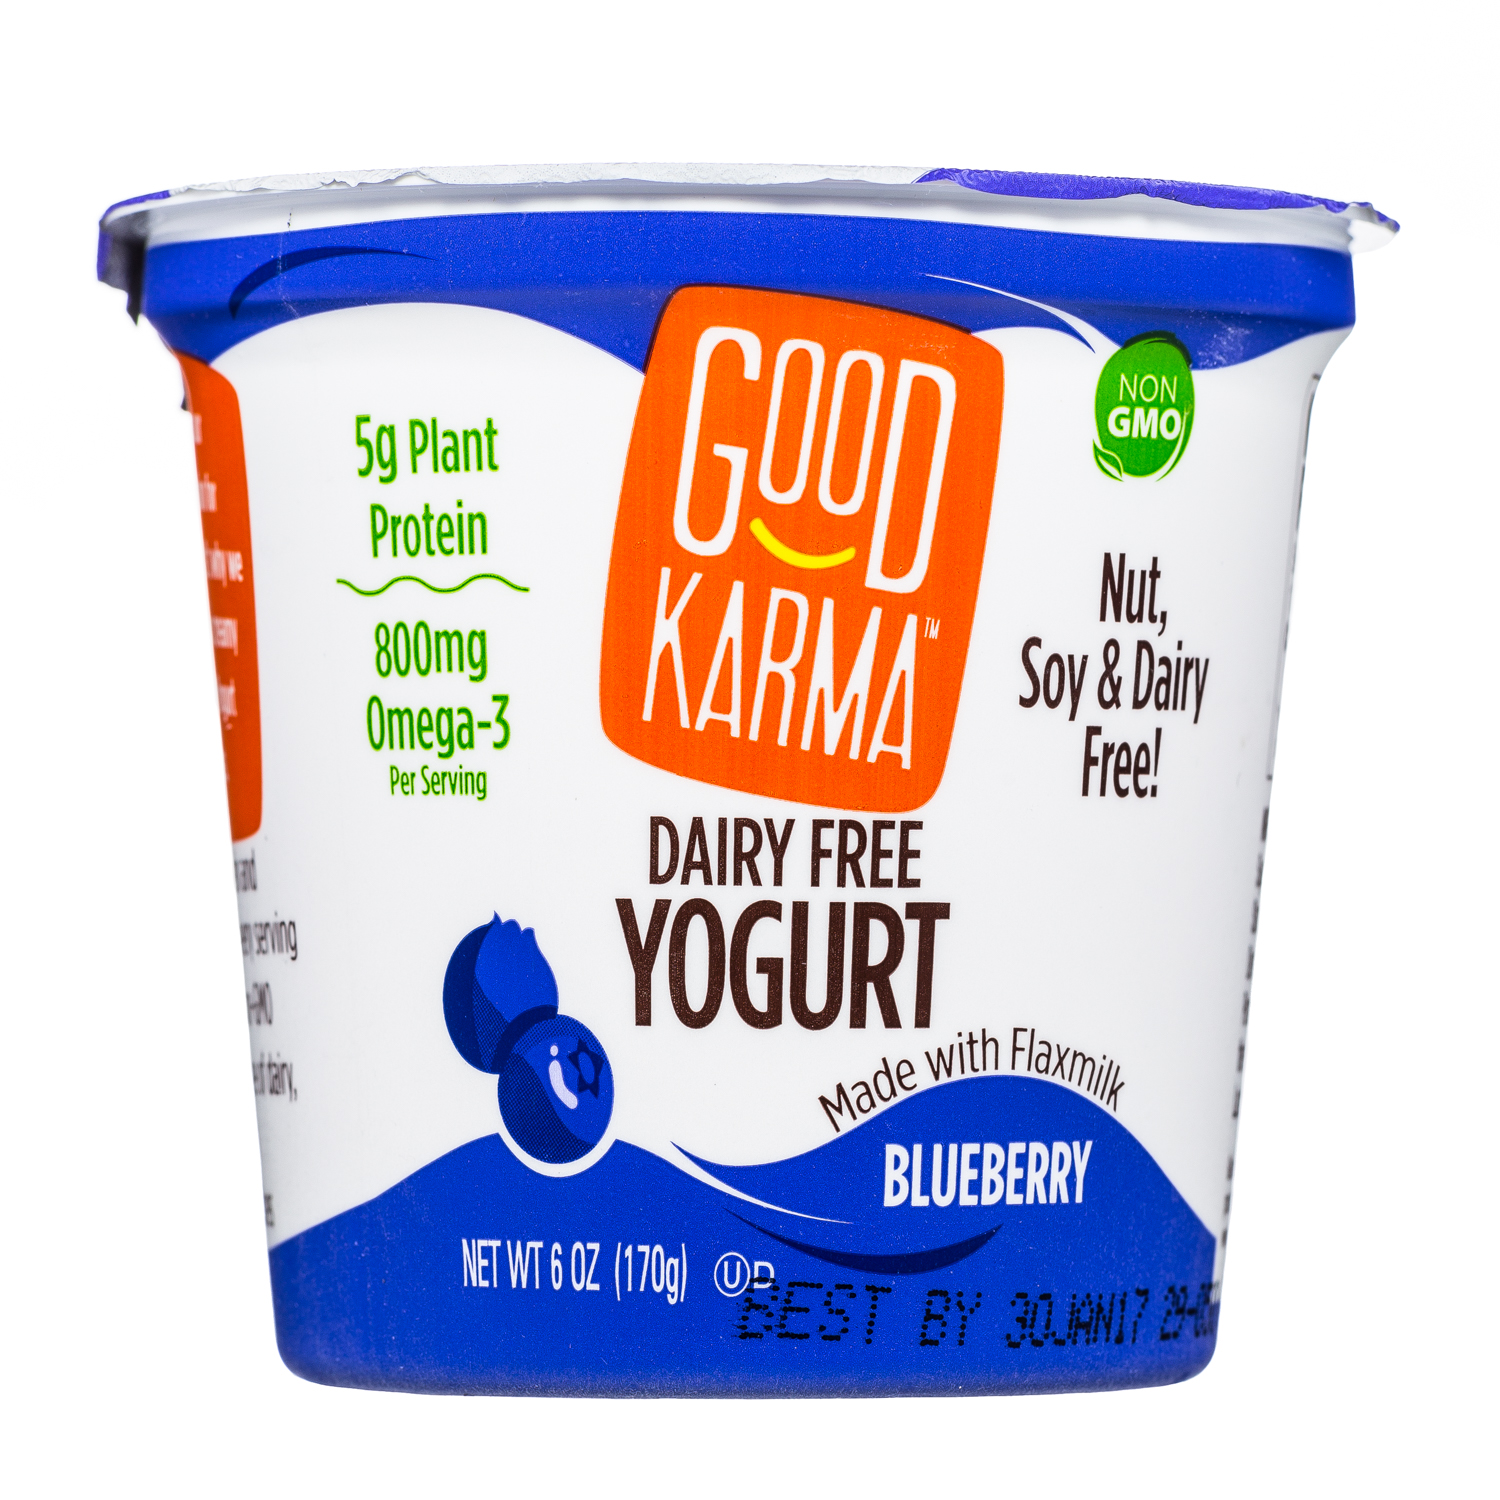 Blueberry Yogurt-6oz